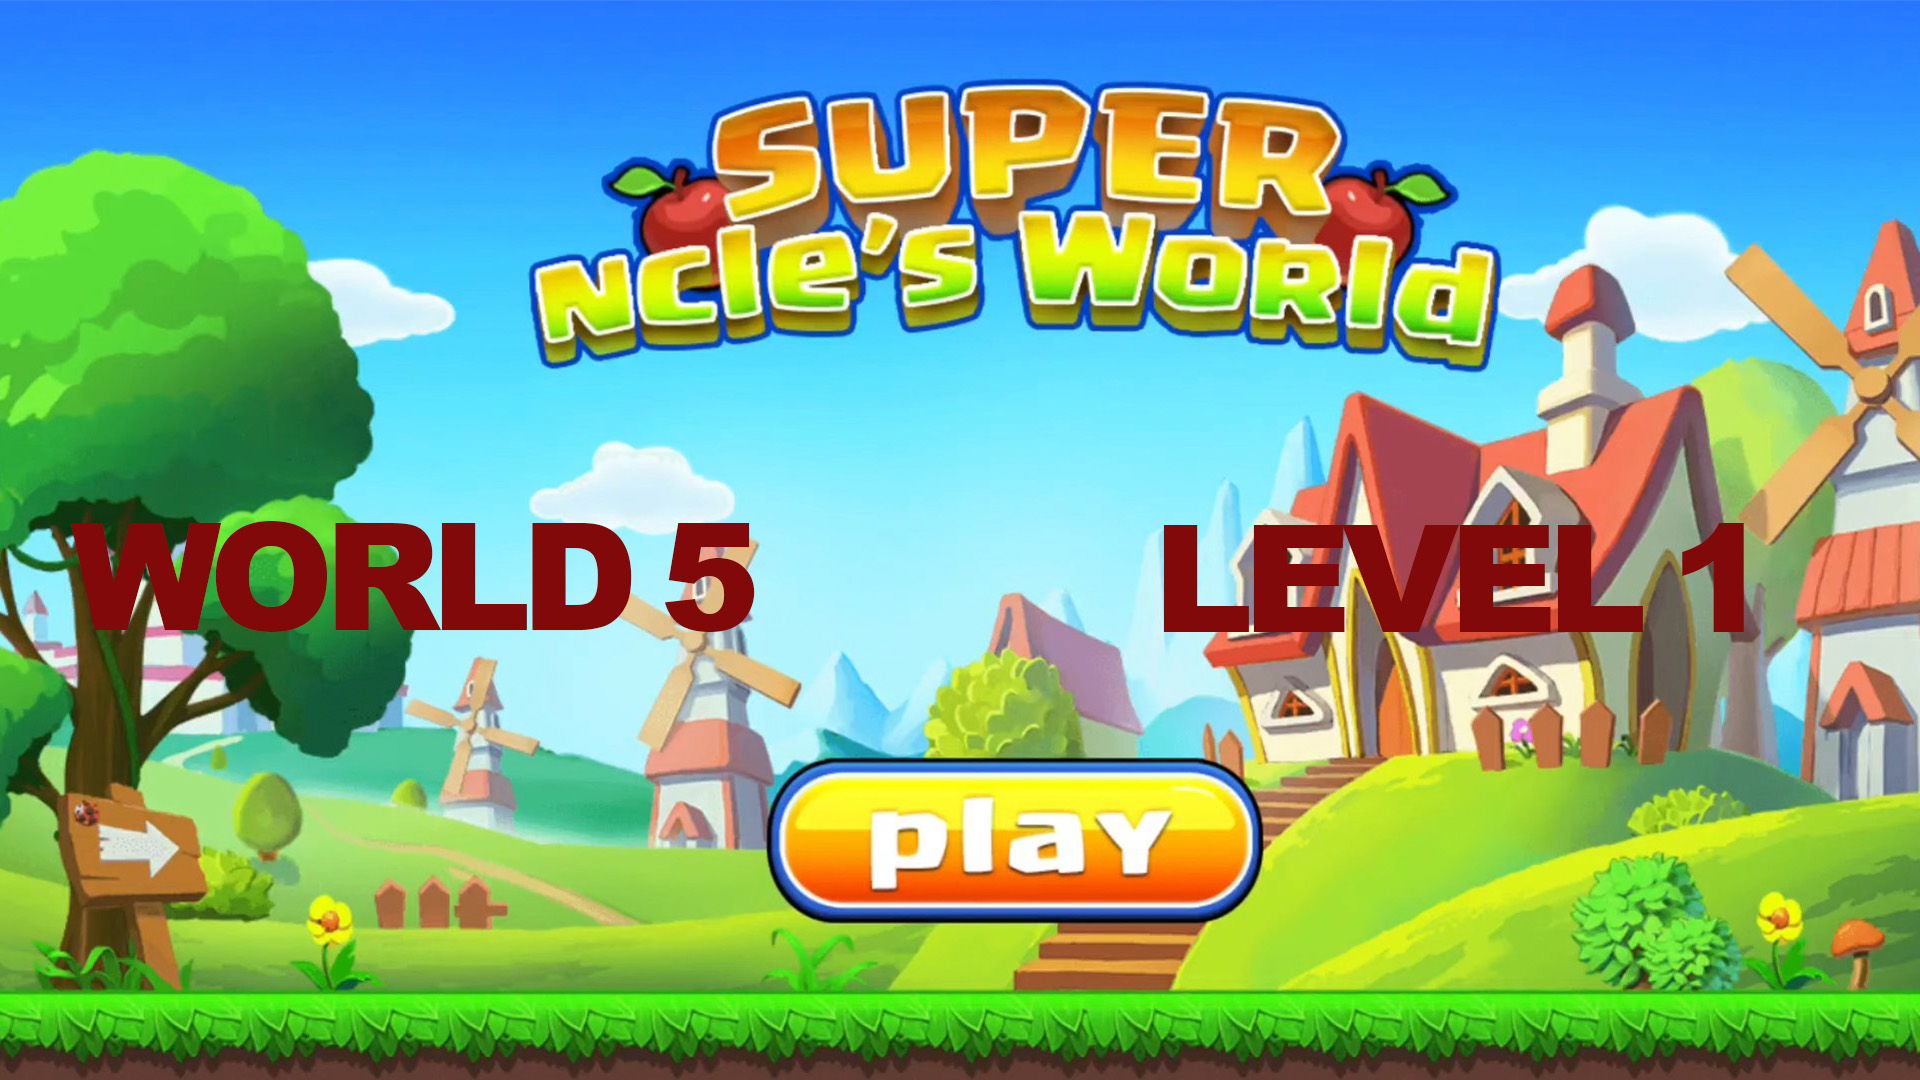 Super ncle's  World 5. Level 1.